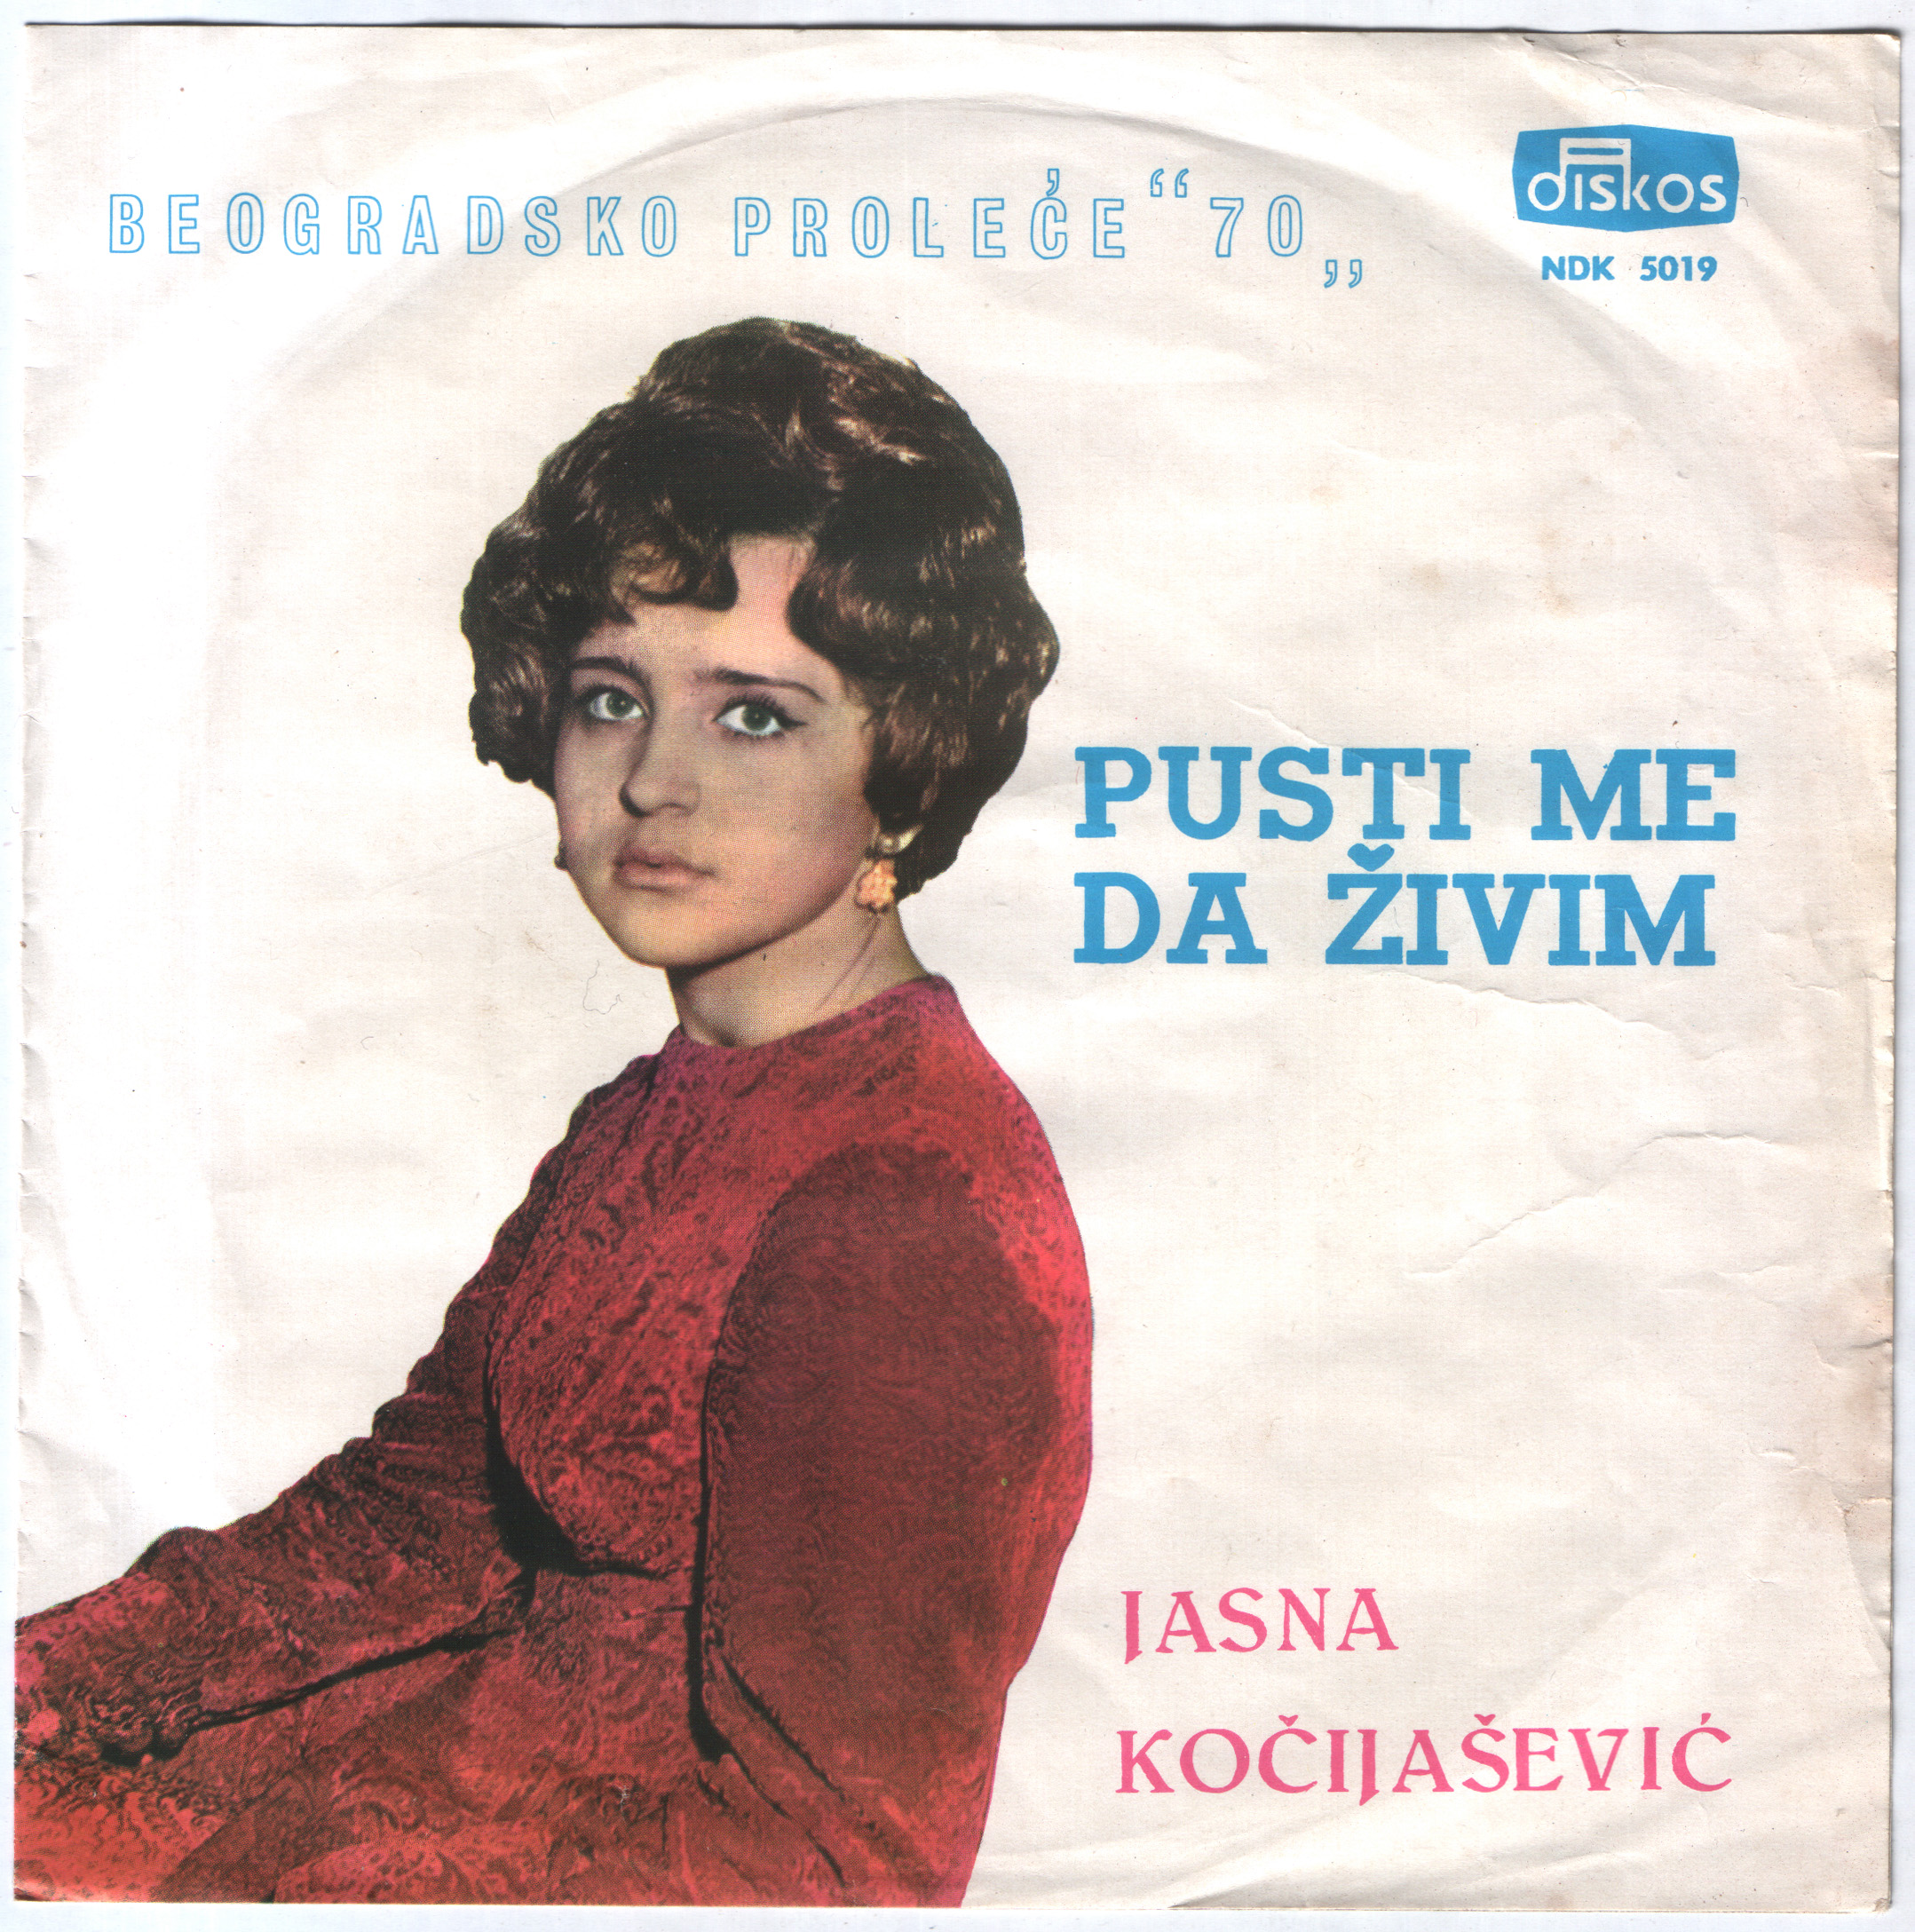 Jasna Kocijasevic 1970 PB